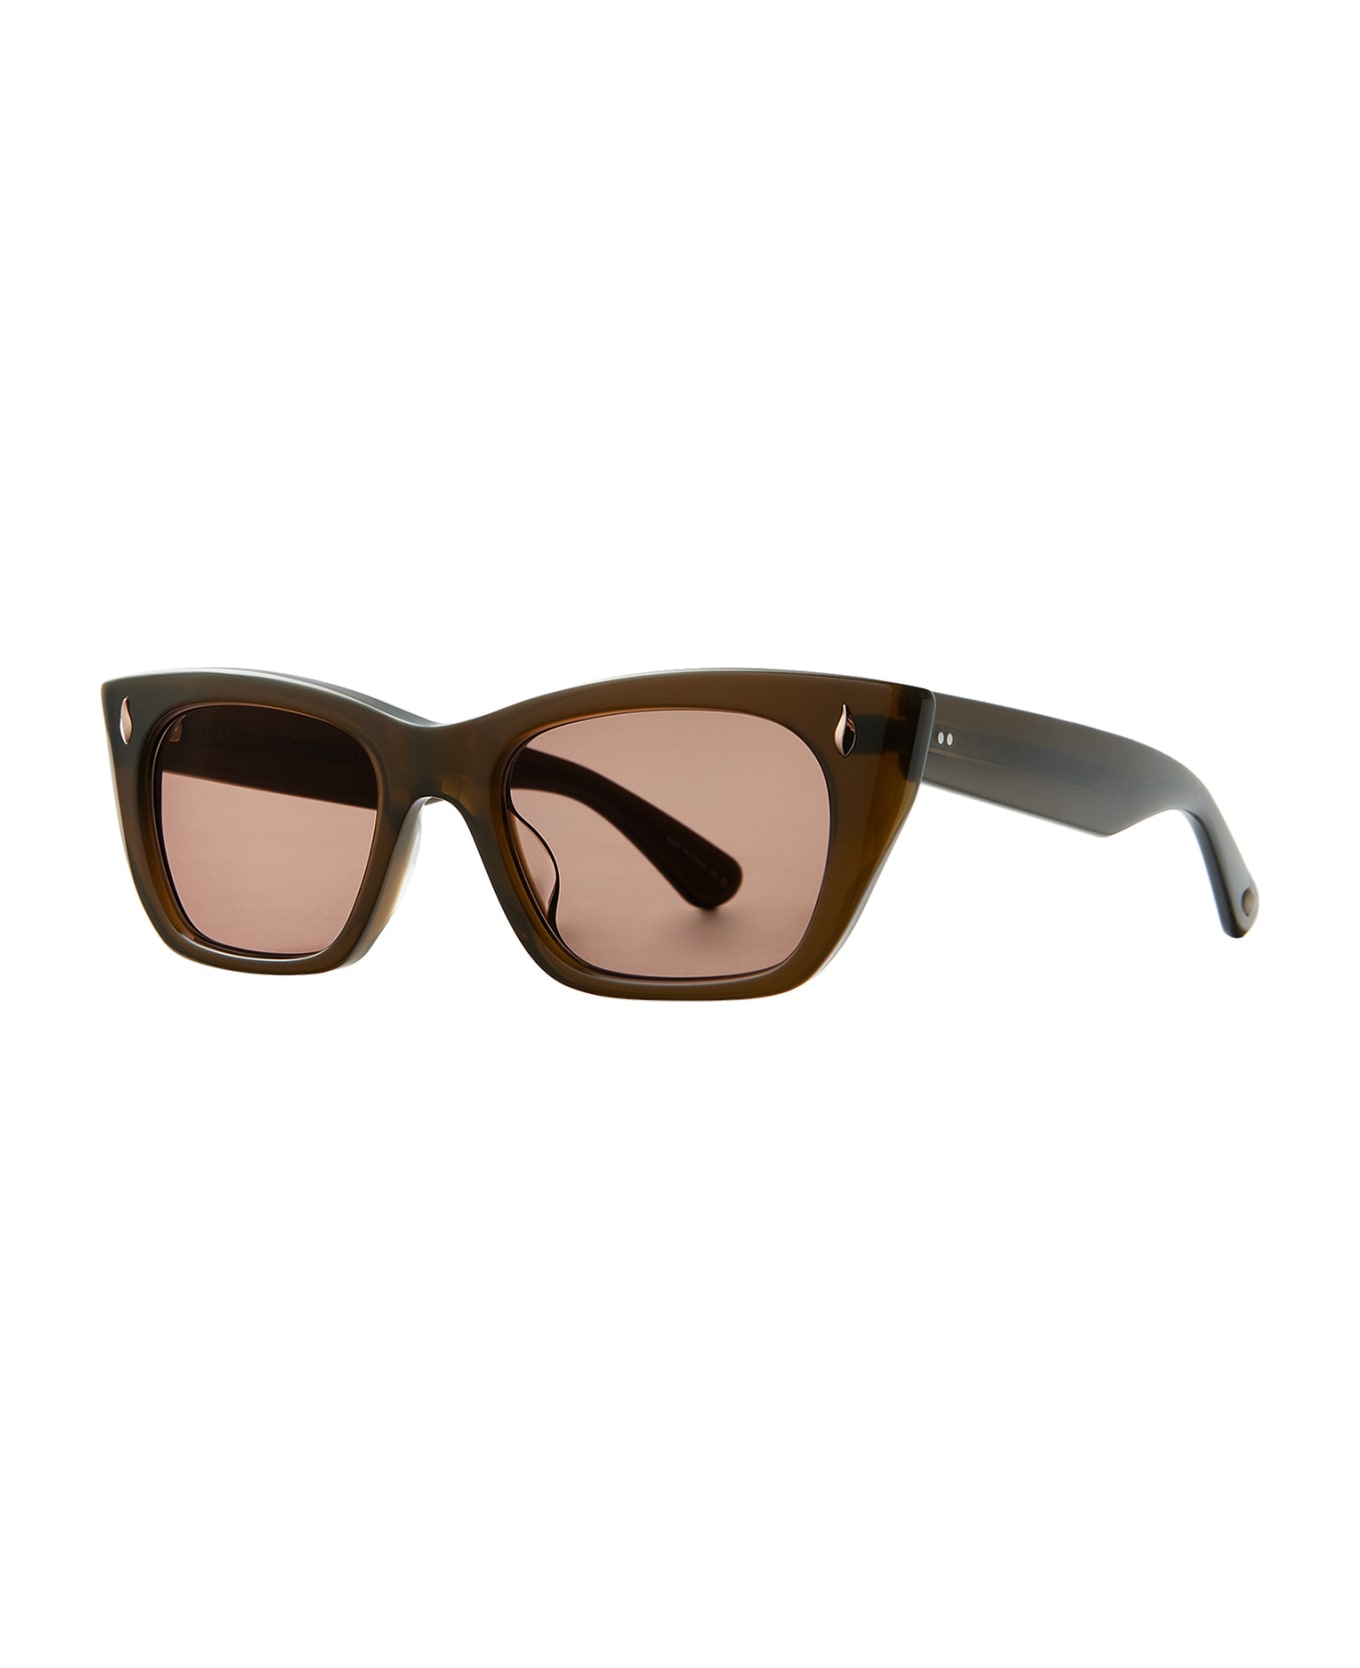 Garrett Leight Webster Sun Mudstone Sunglasses - Mudstone サングラス